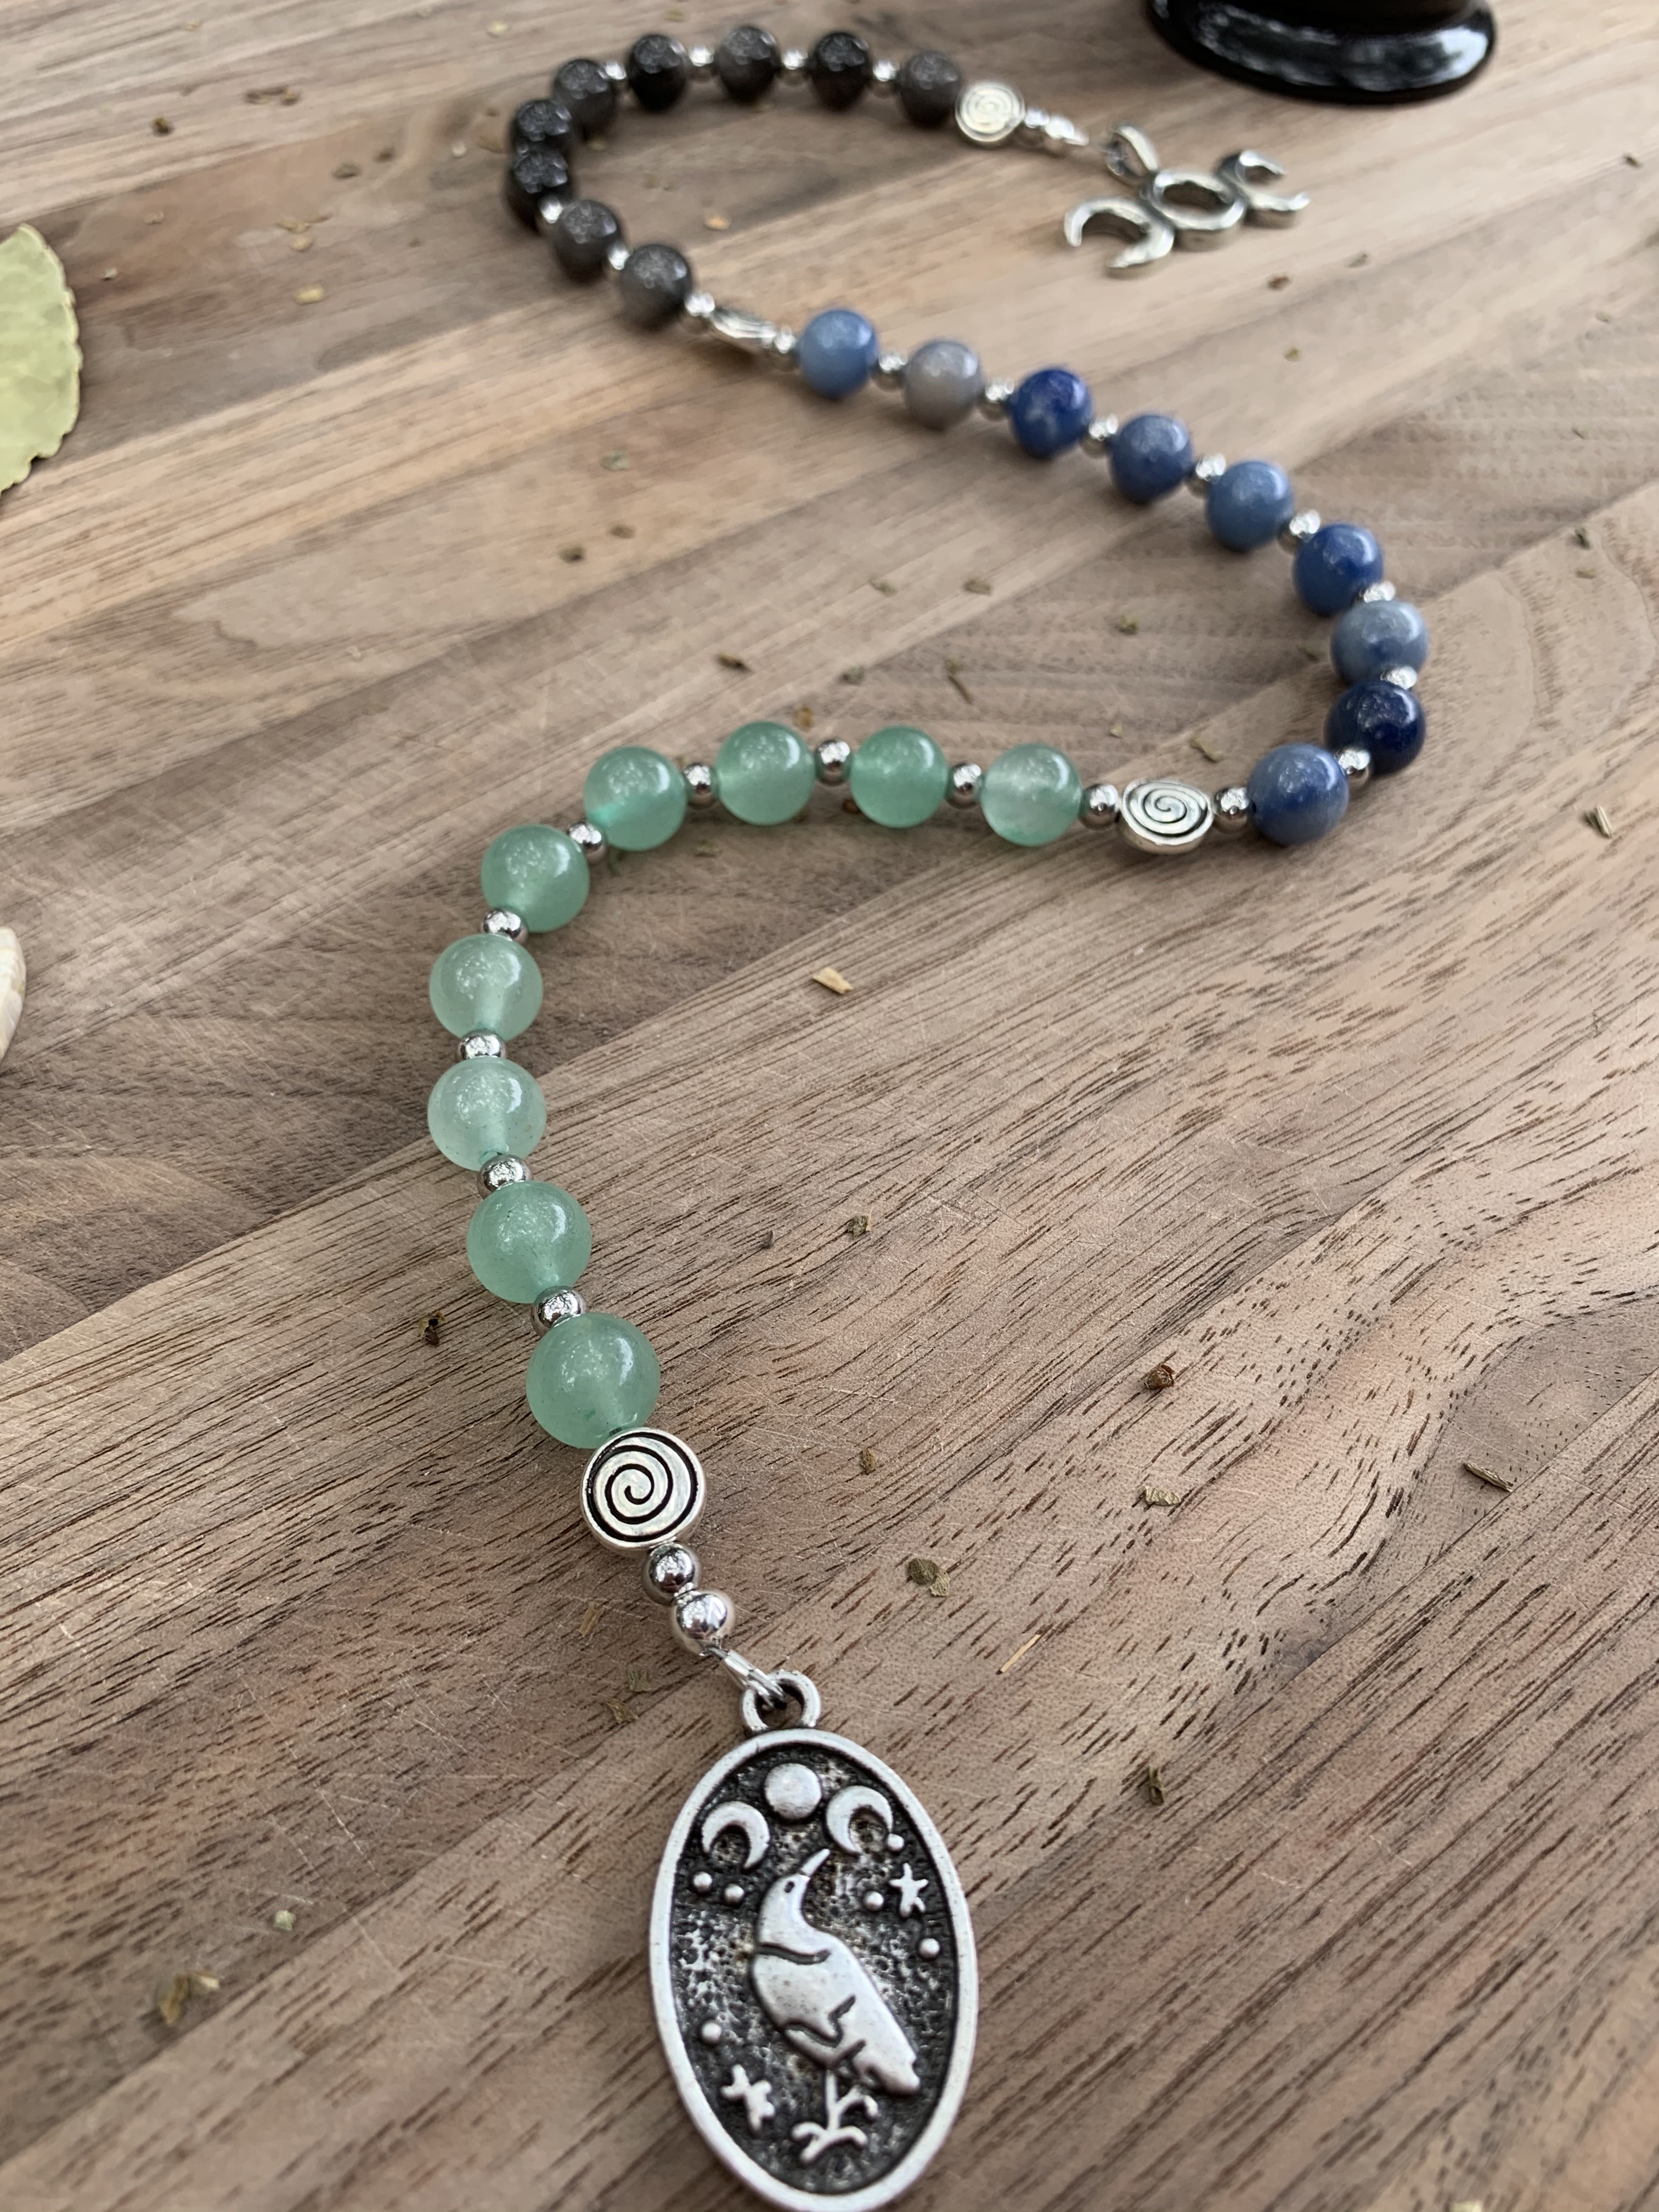 Wiccan Prayer Beads: Triple Goddess Prayer Beads